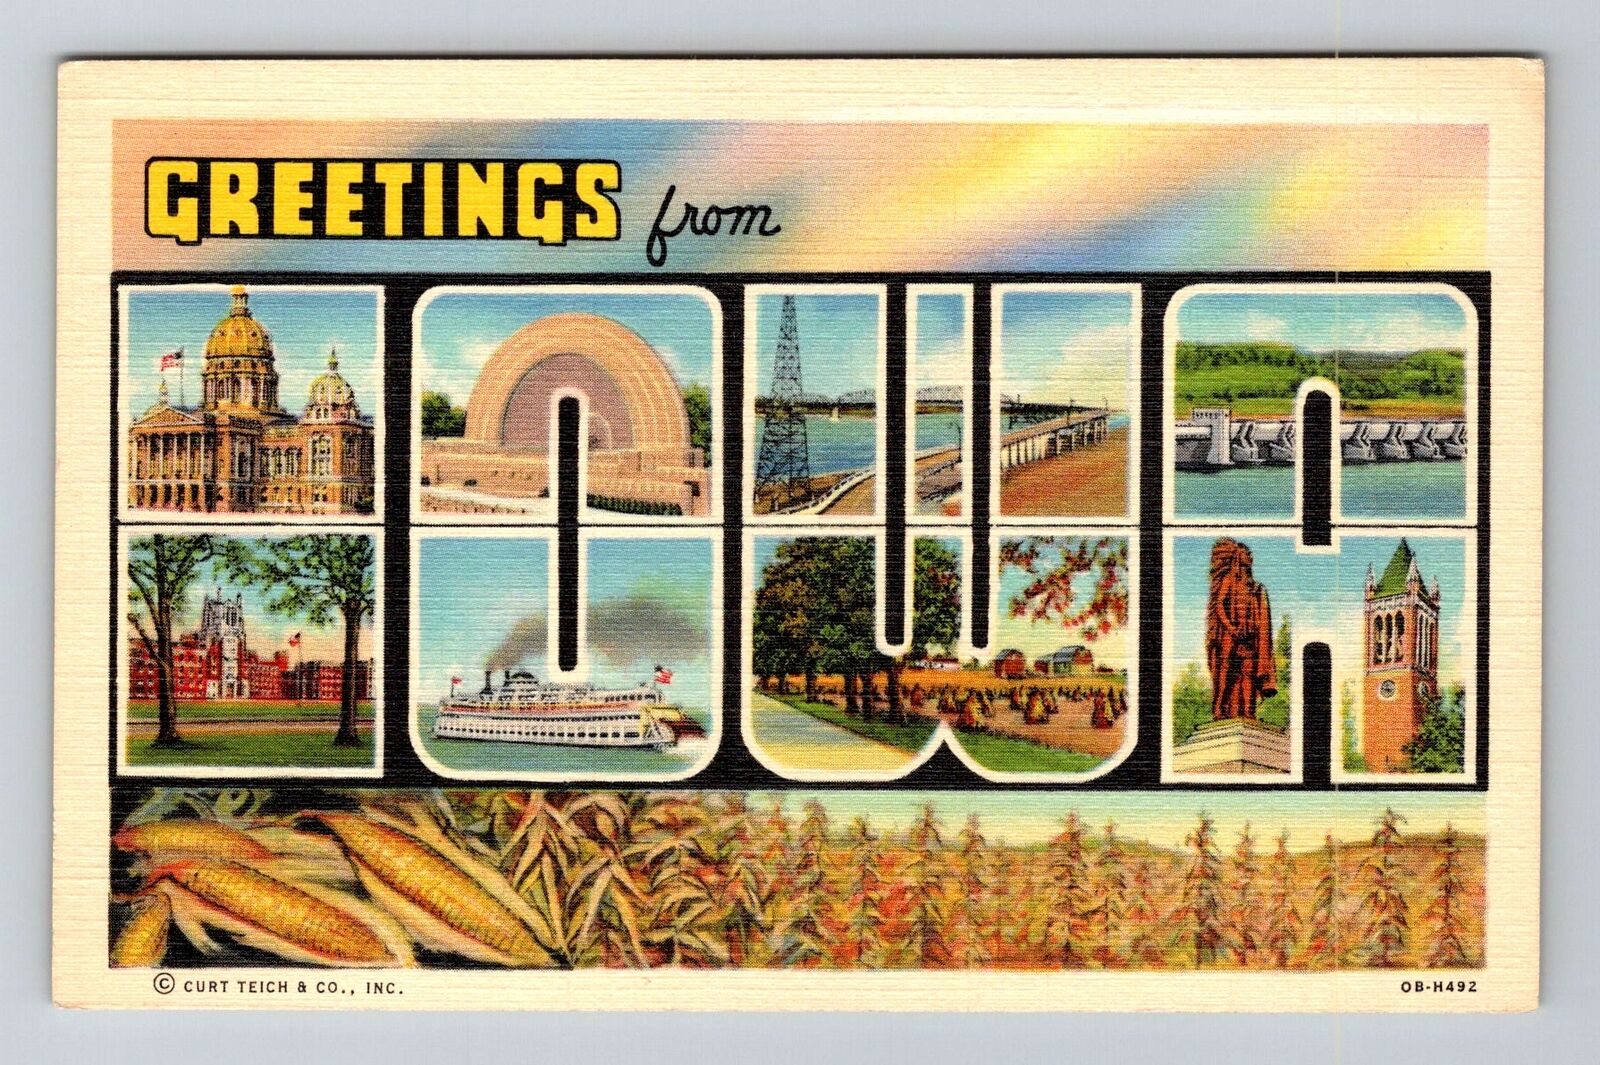 IA-Iowa, General LARGE LETTER Greetings, Corn Fields, Vintage Postcard